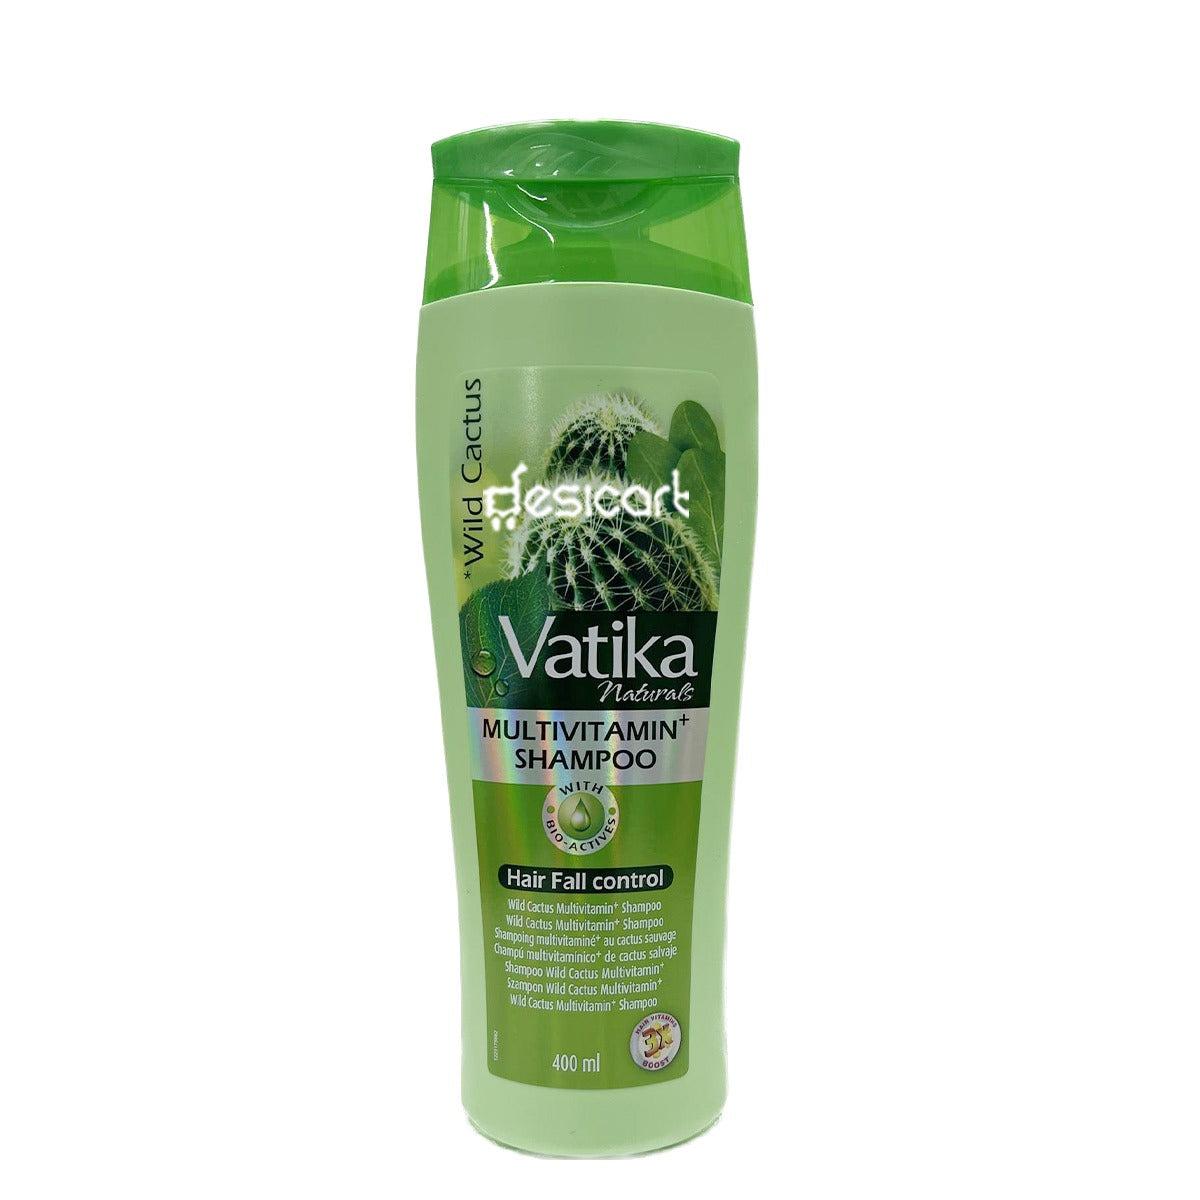 Dabur Vatika Wild Cactus Shampoo 400ml